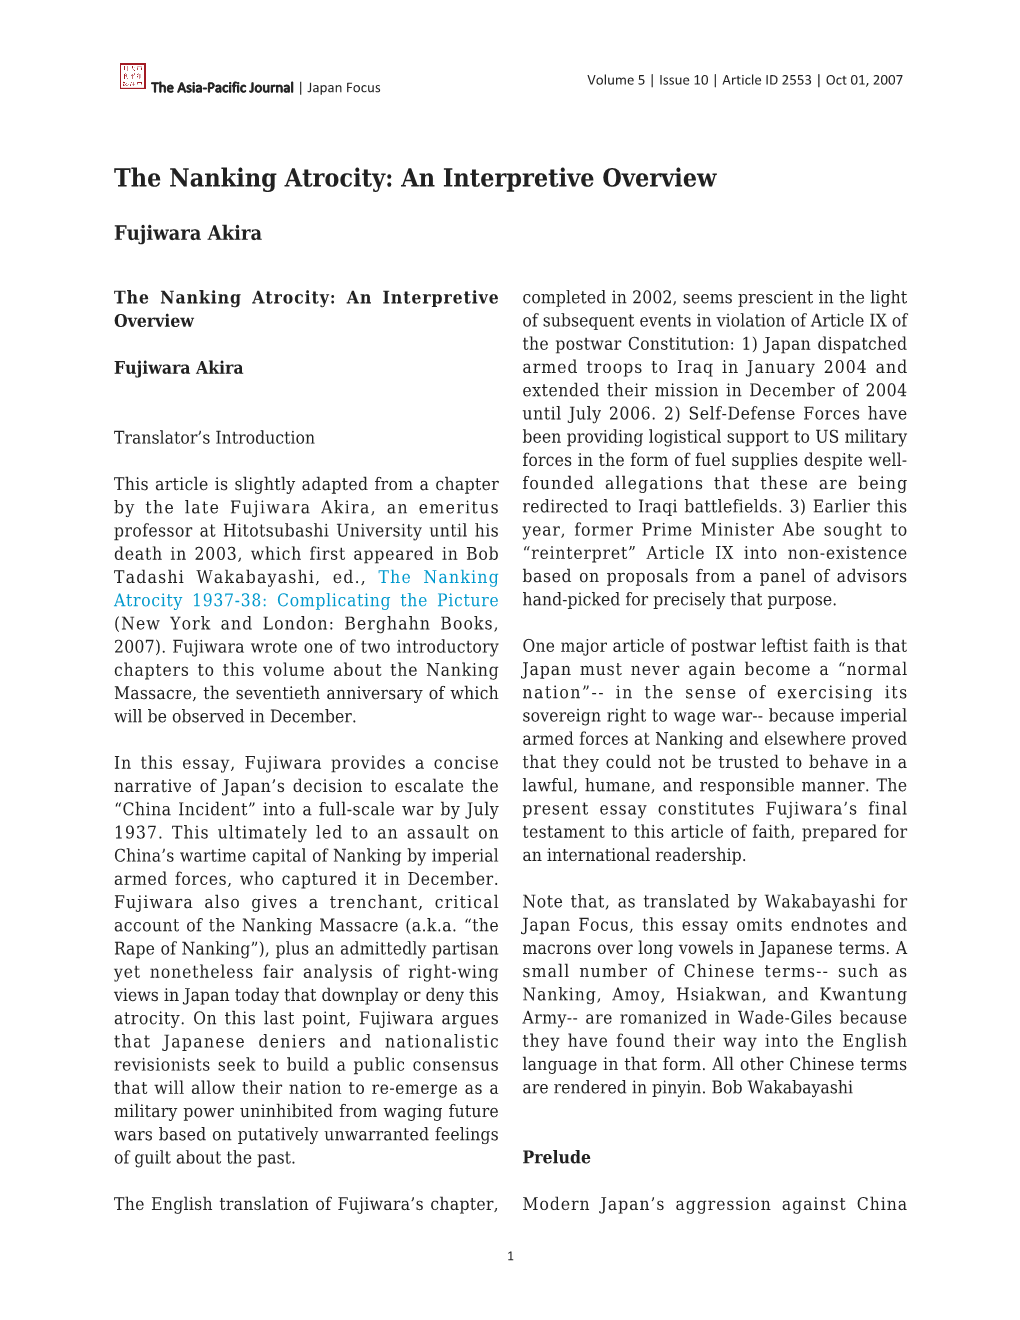 The Nanking Atrocity: an Interpretive Overview